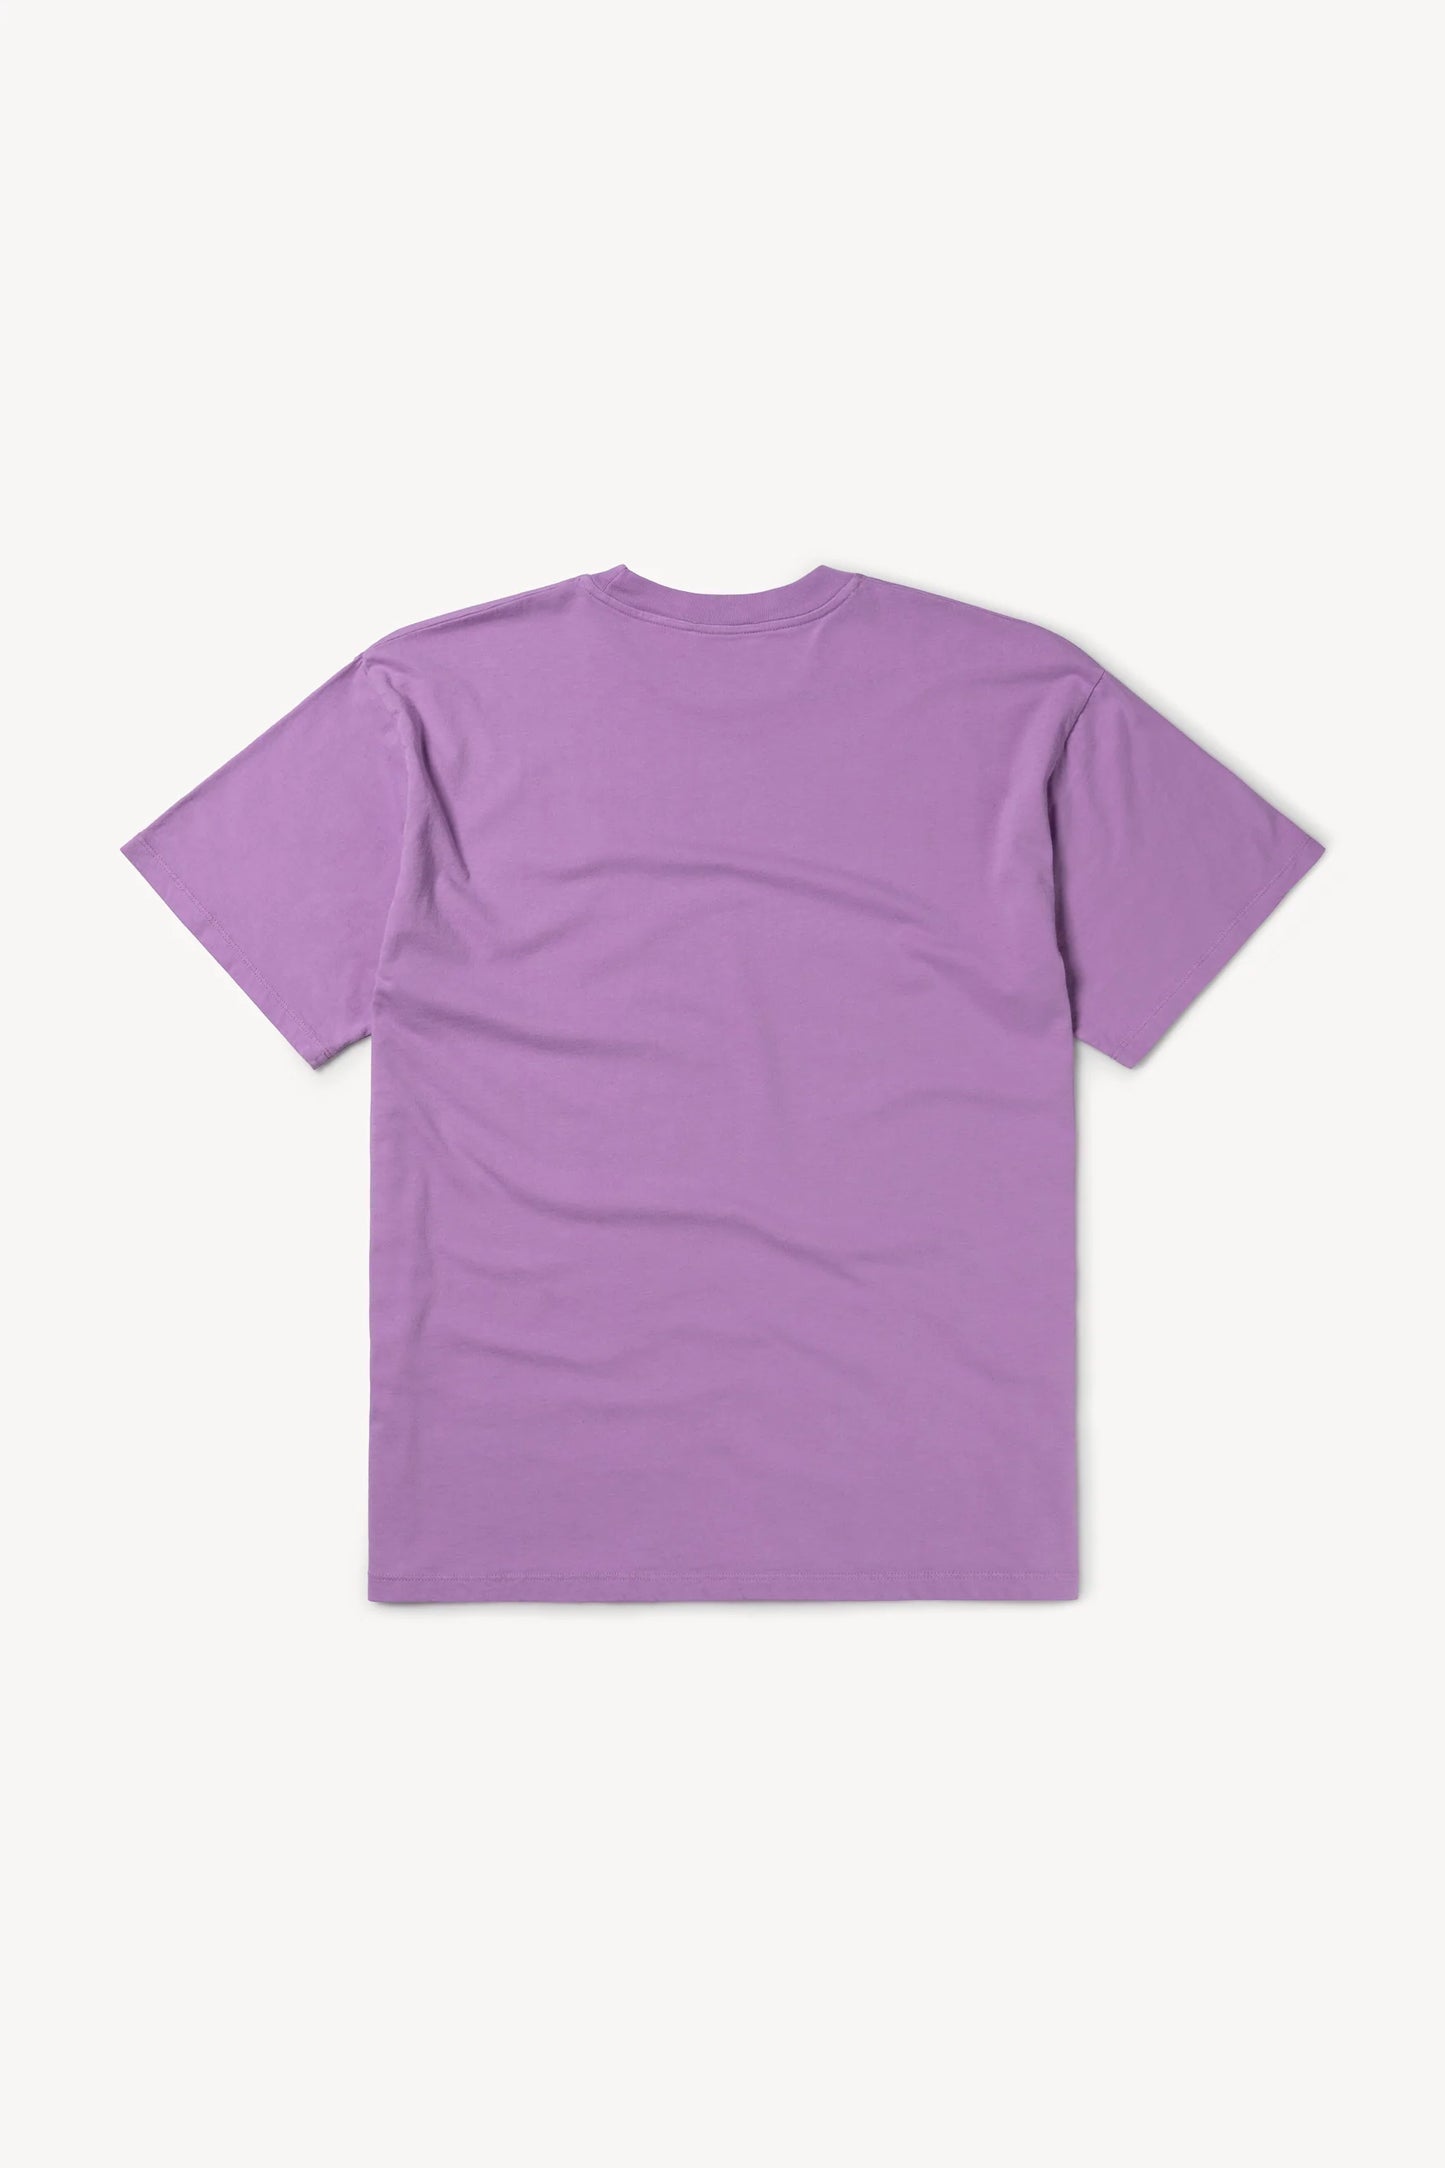 Print Tee, Iris, T-Shirt